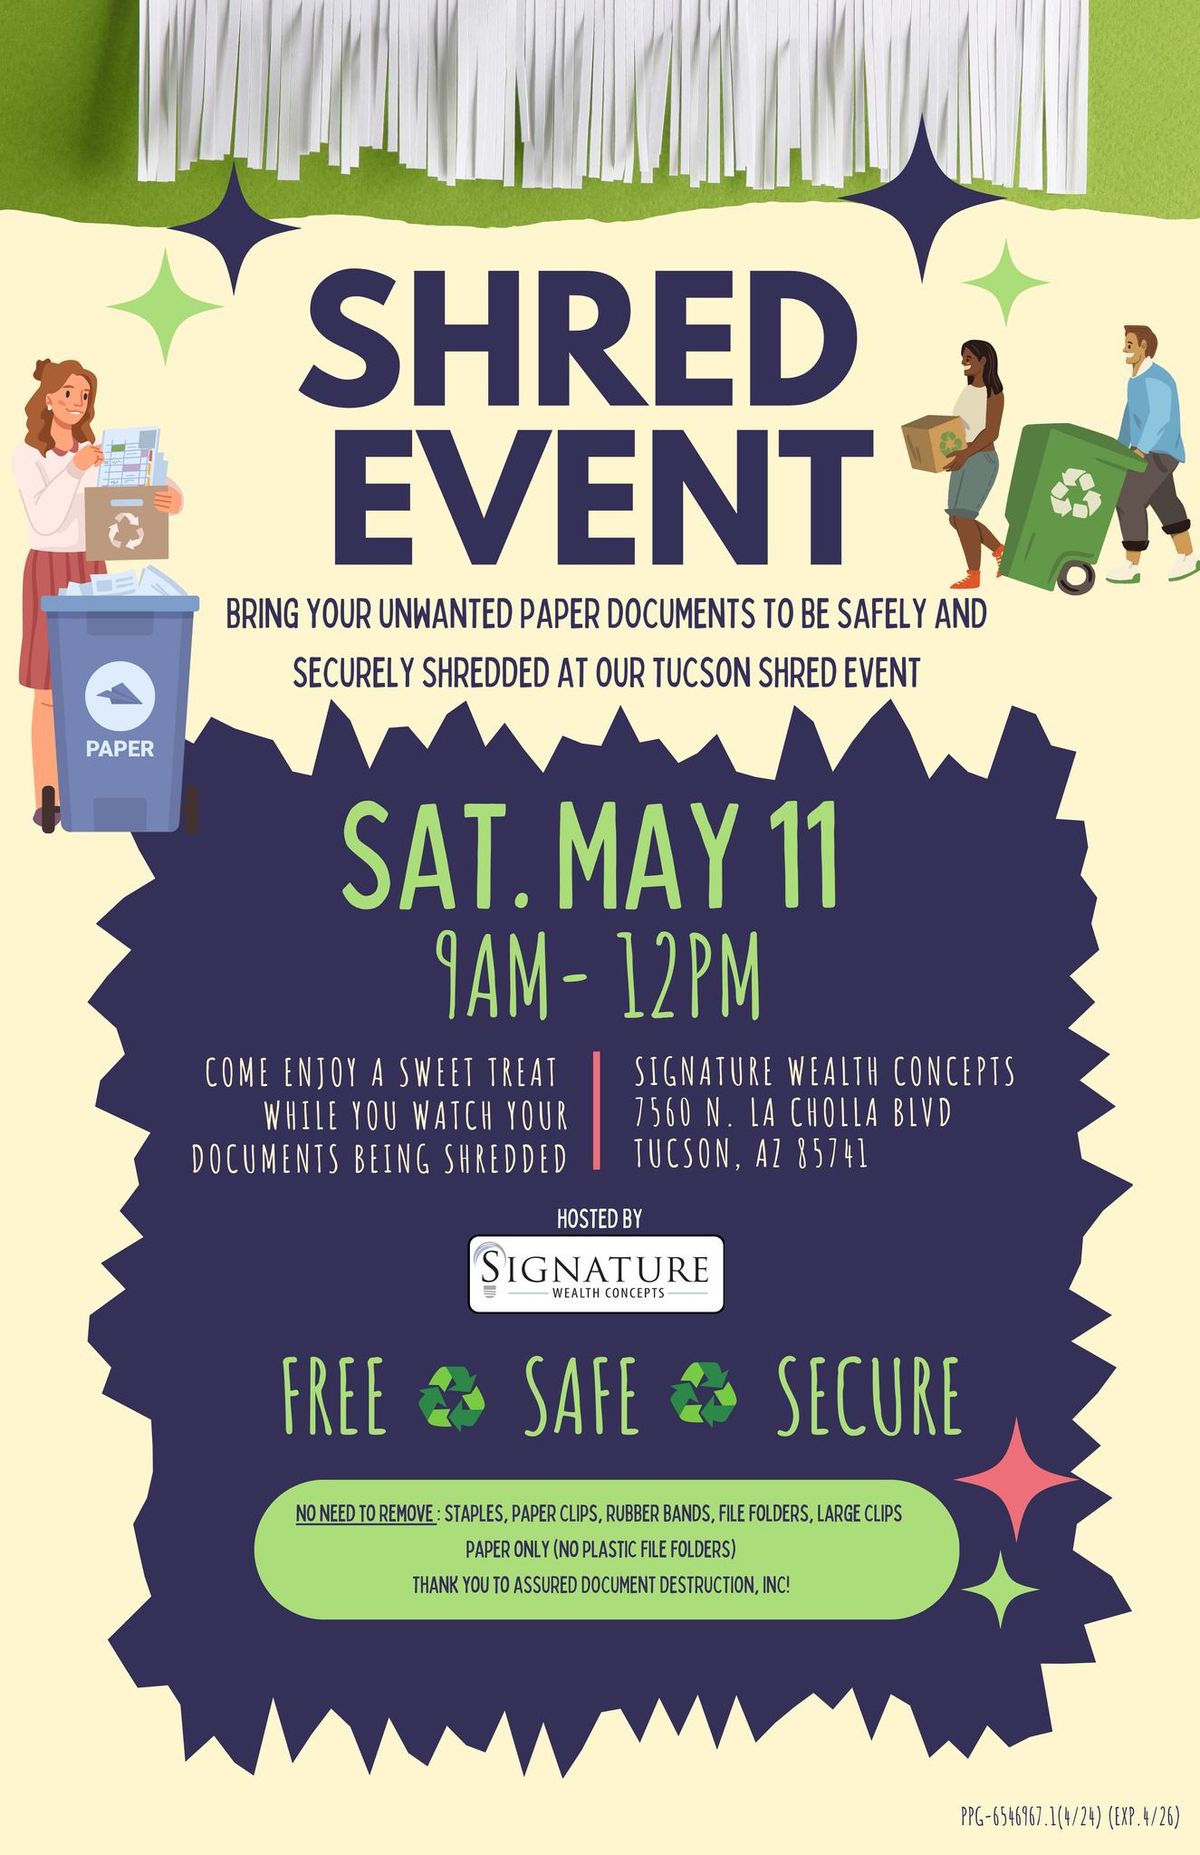 Tucson Shred Event 